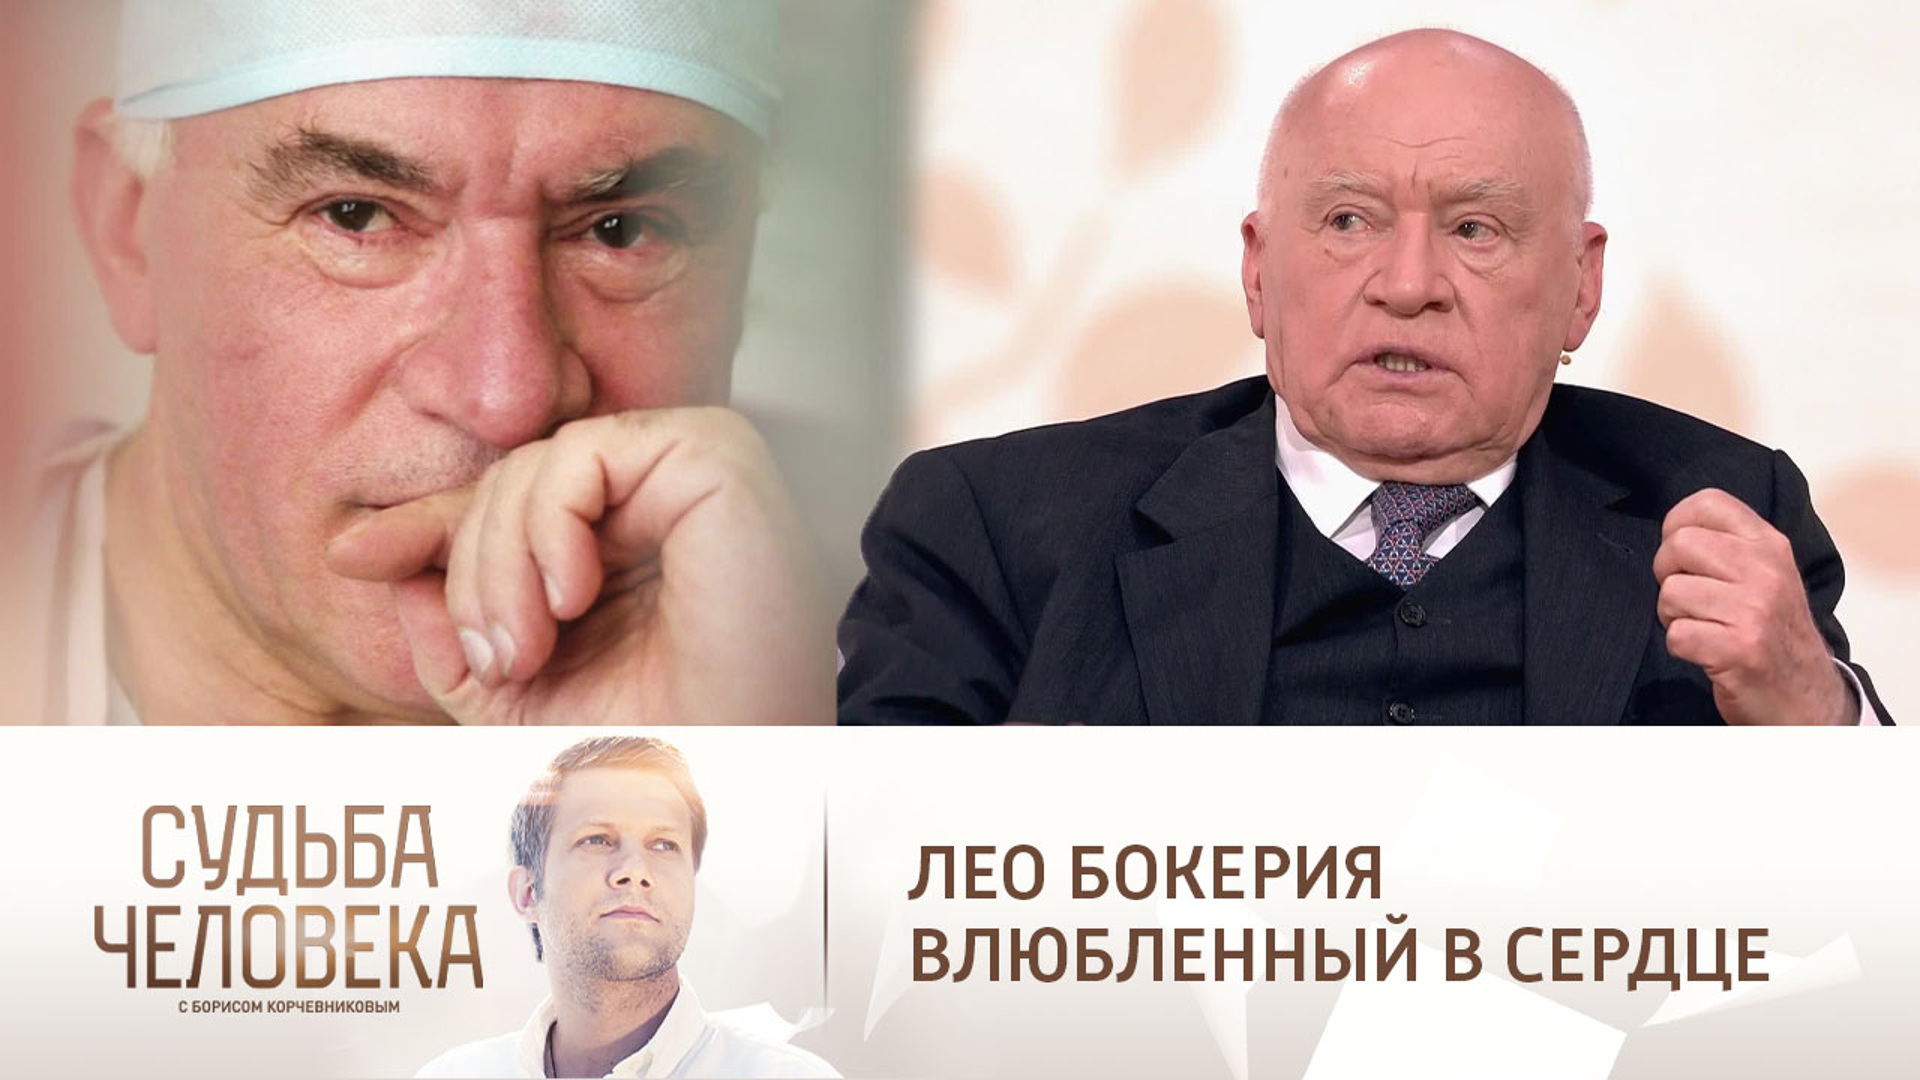 Лео Бокерия судьба человека с Борисом Корчевниковым